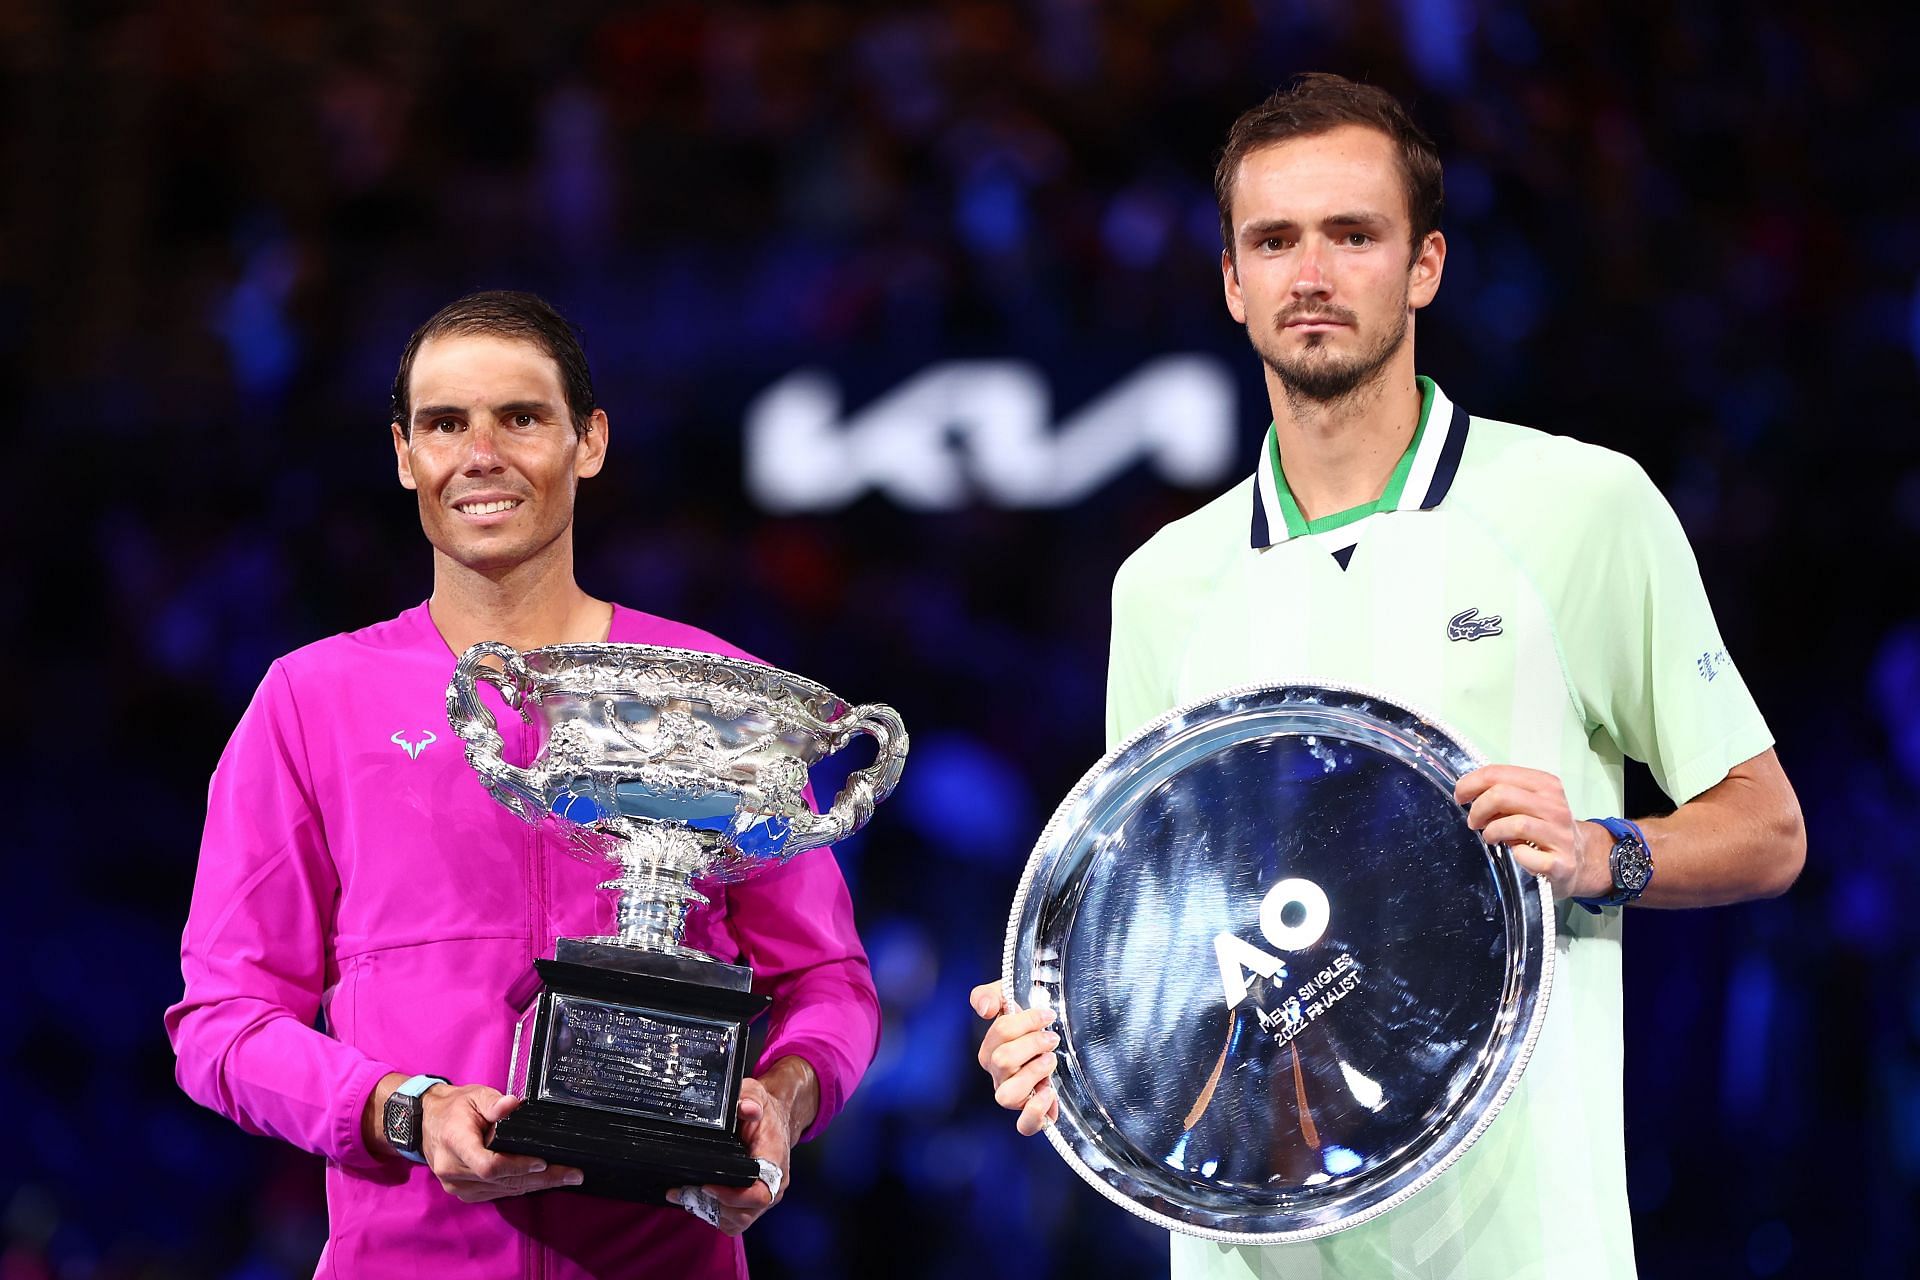 Rafael Nadal with Daniil Medvedev at the Australian Open 2022